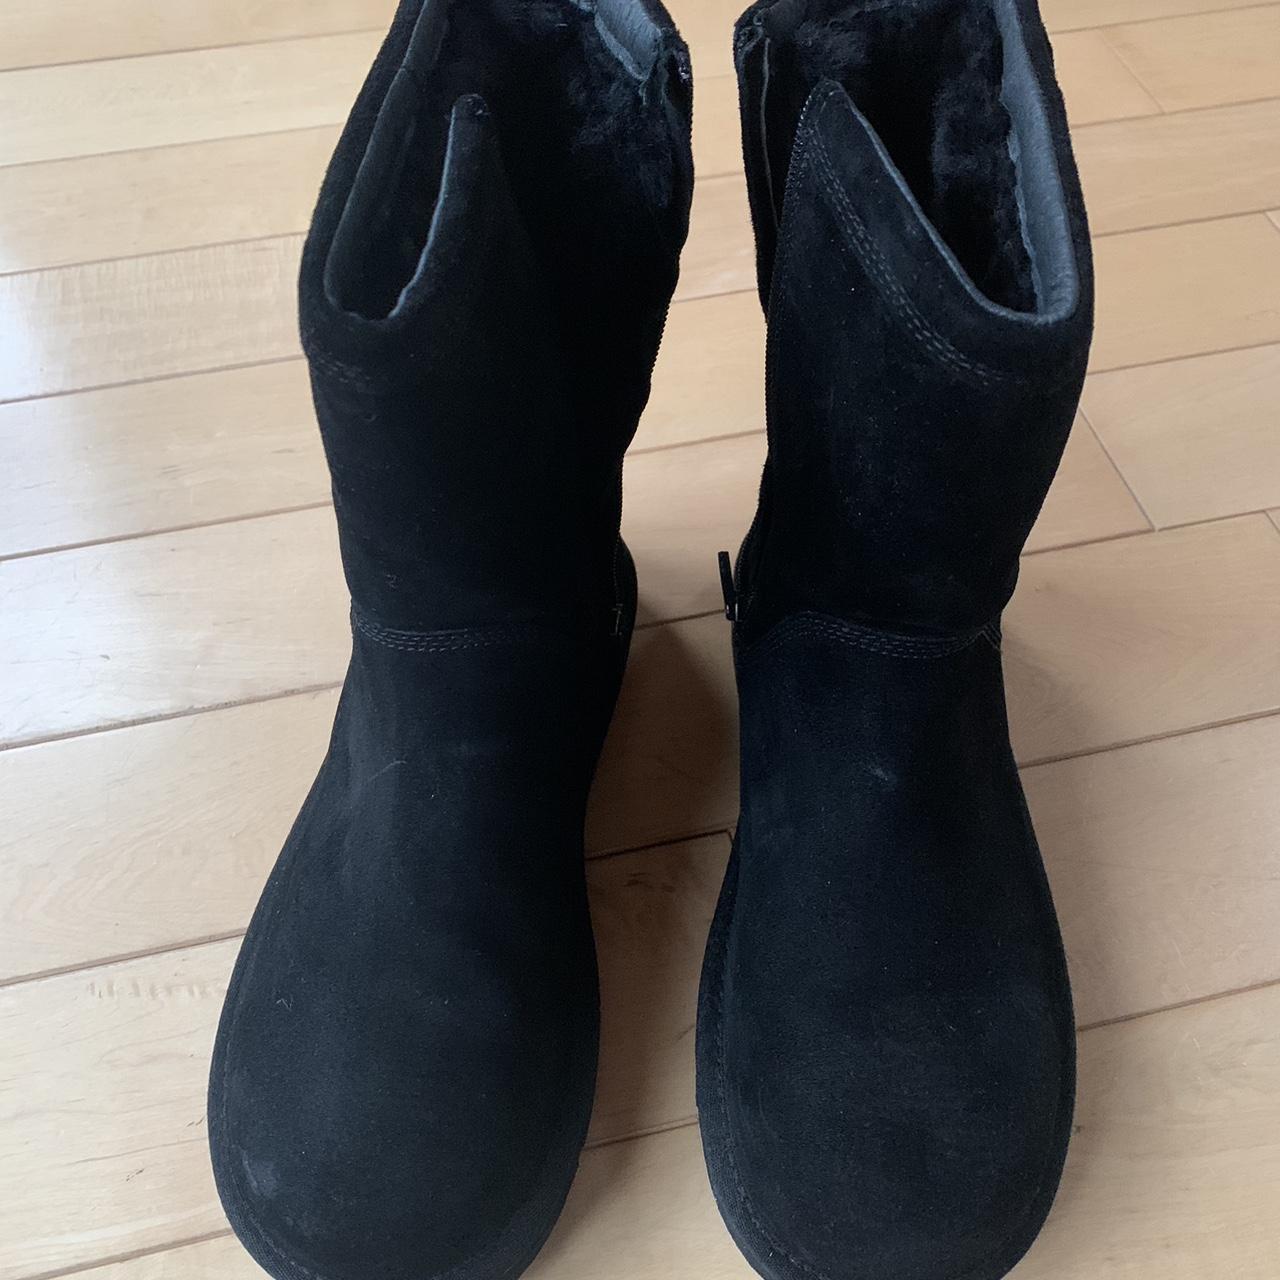 Black Ugg boots Only worn a few times, still in... - Depop